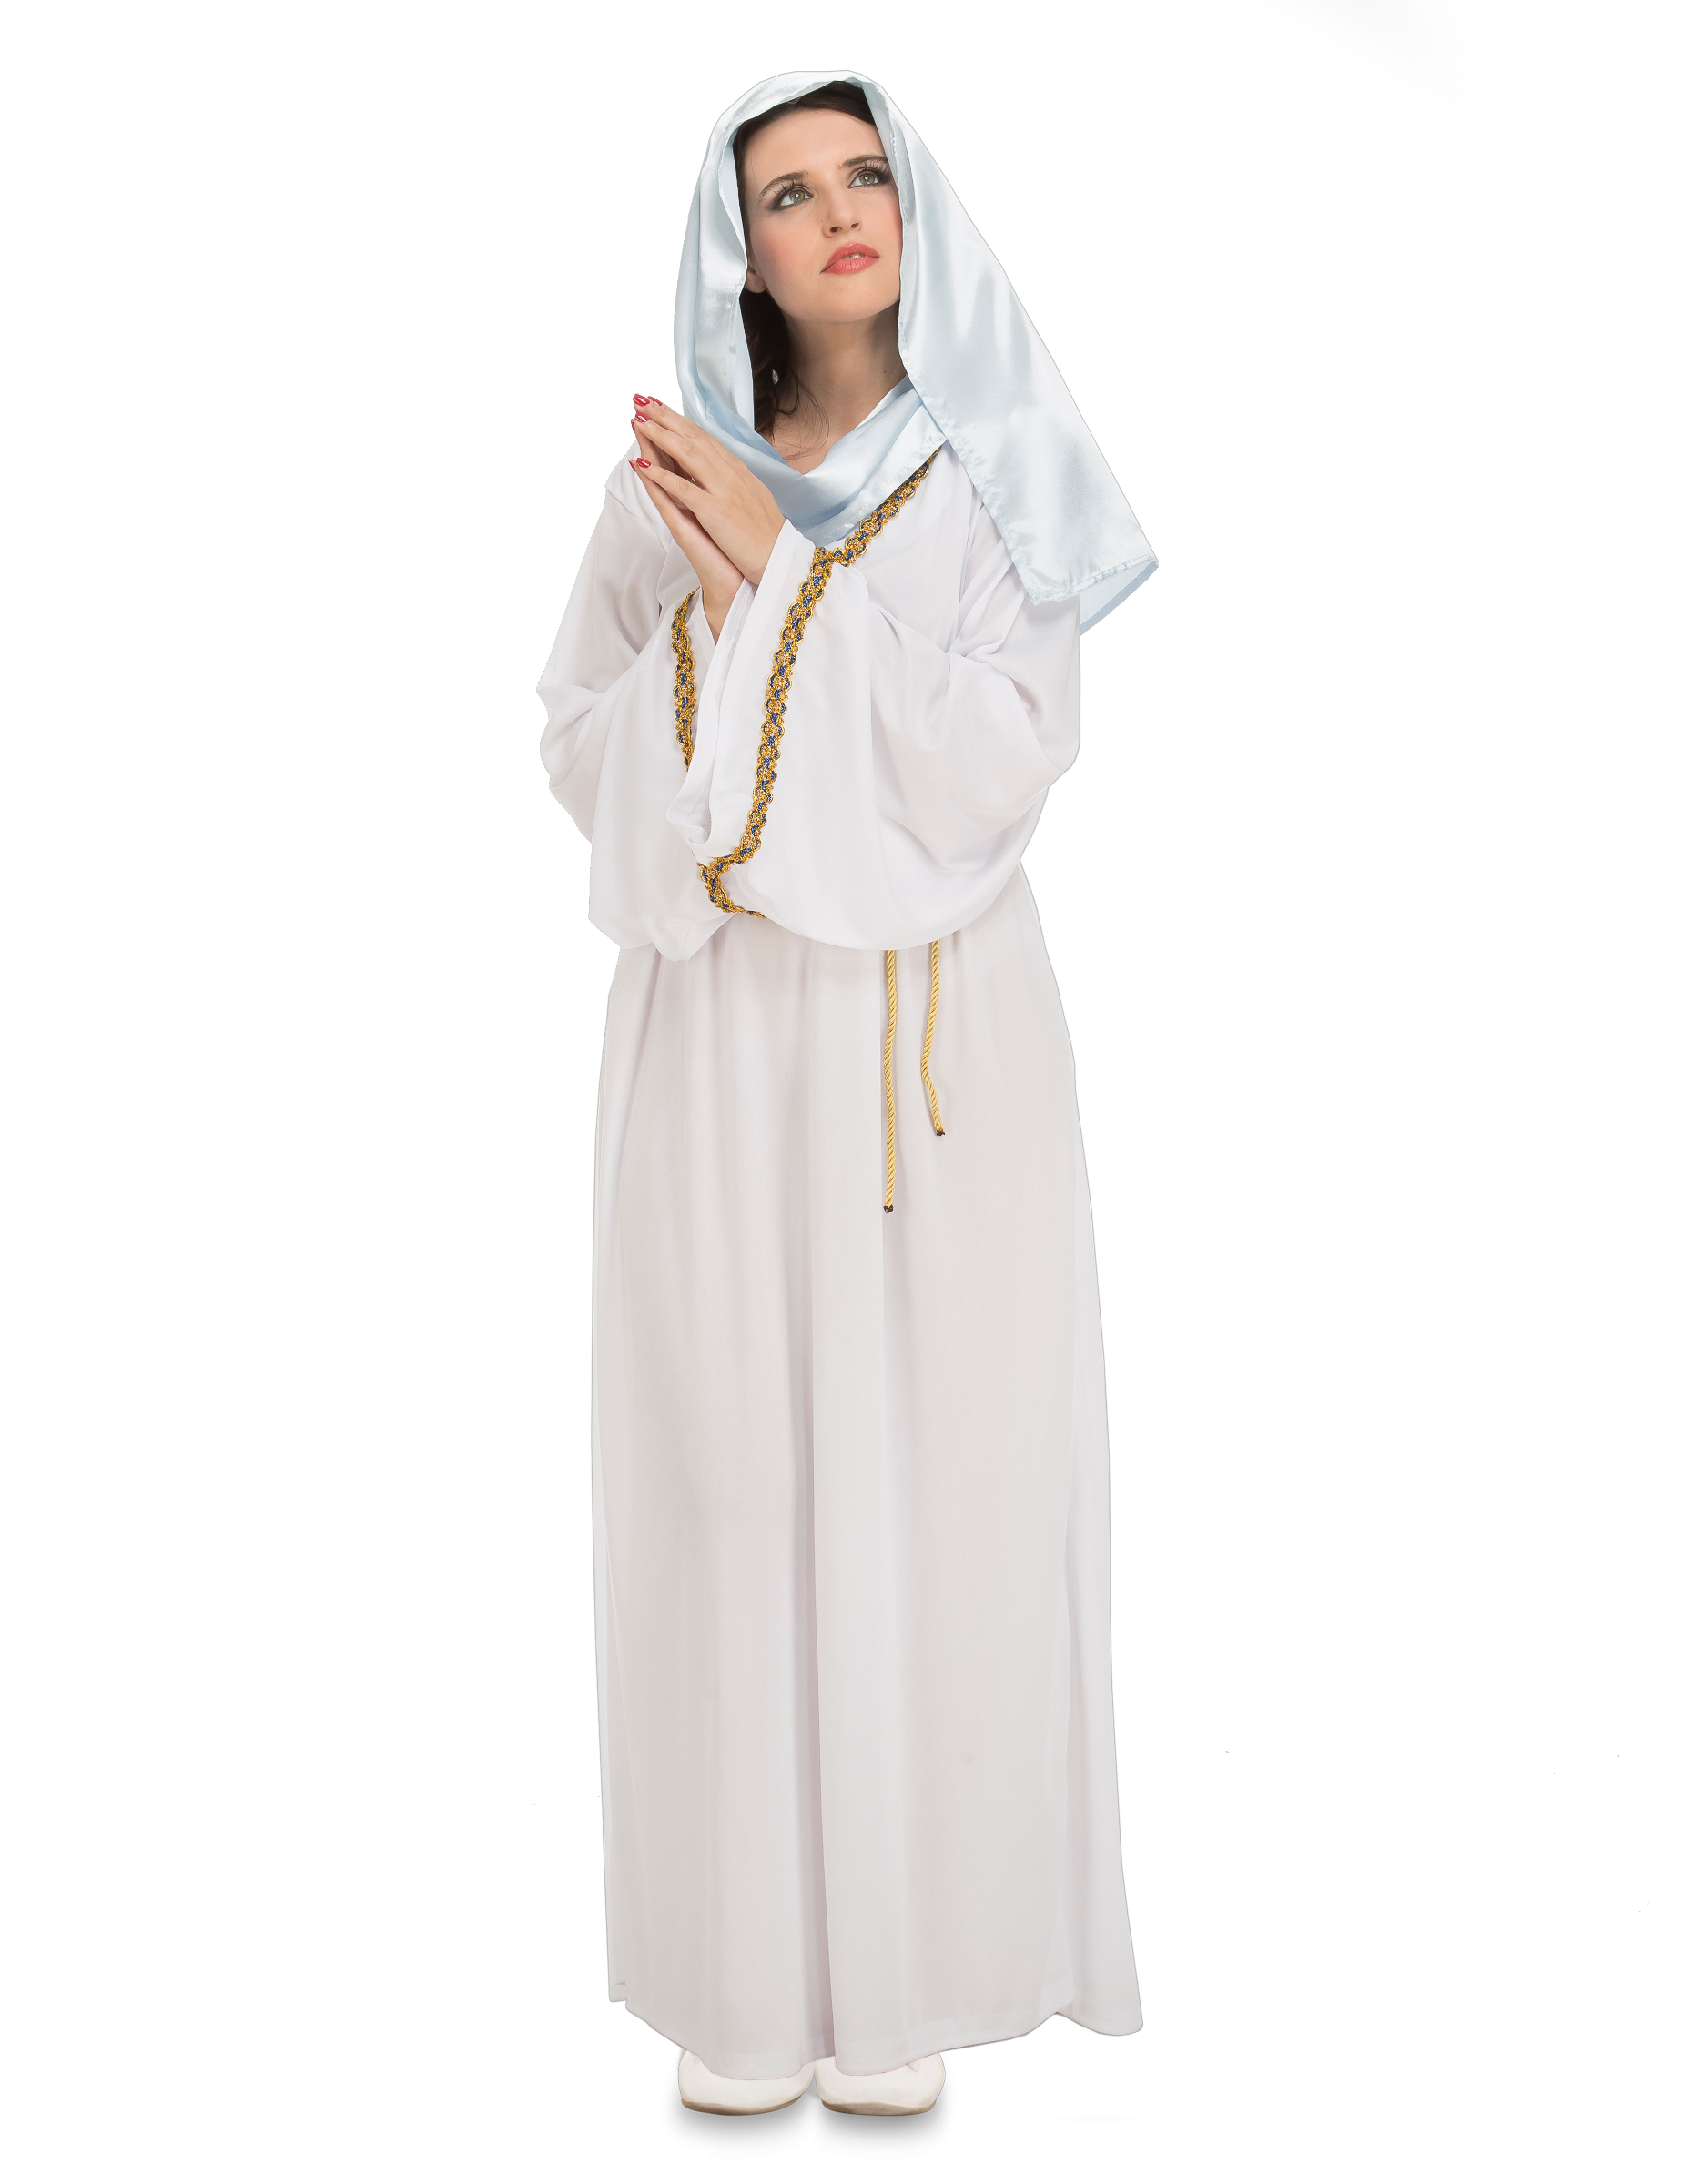 Jungfrau-Maria-Kostüm 3-teilig weiß-gold von VIVING COSTUMES / JUINSA